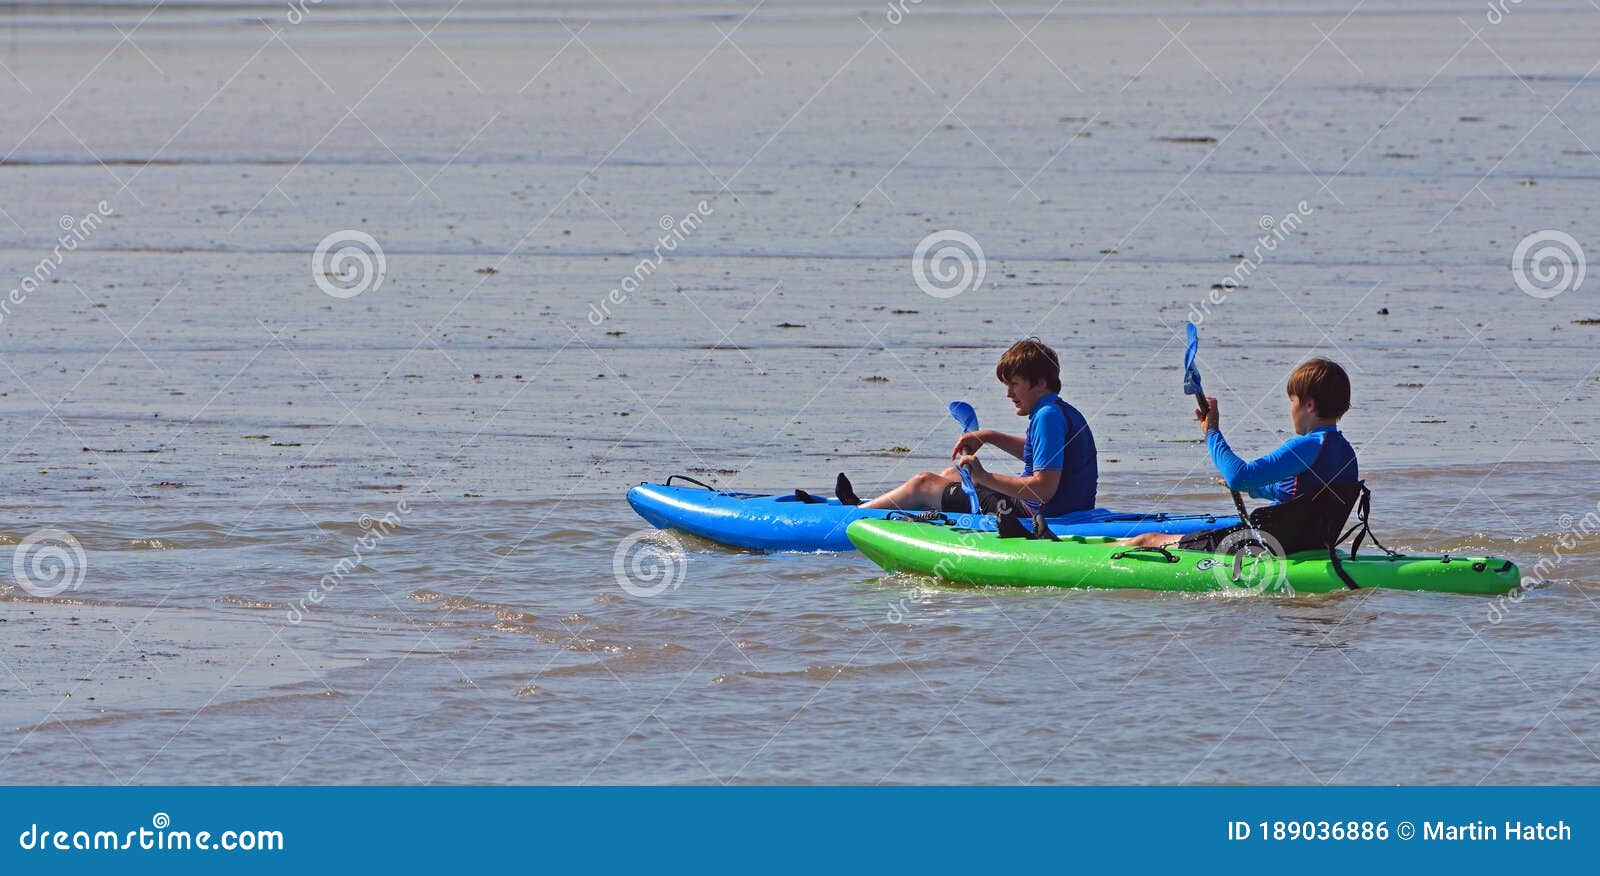 Boys Paddling Kayaks In Streams Between Mud Flats. Editorial Photo - Image  of nature, kayaking: 189036886